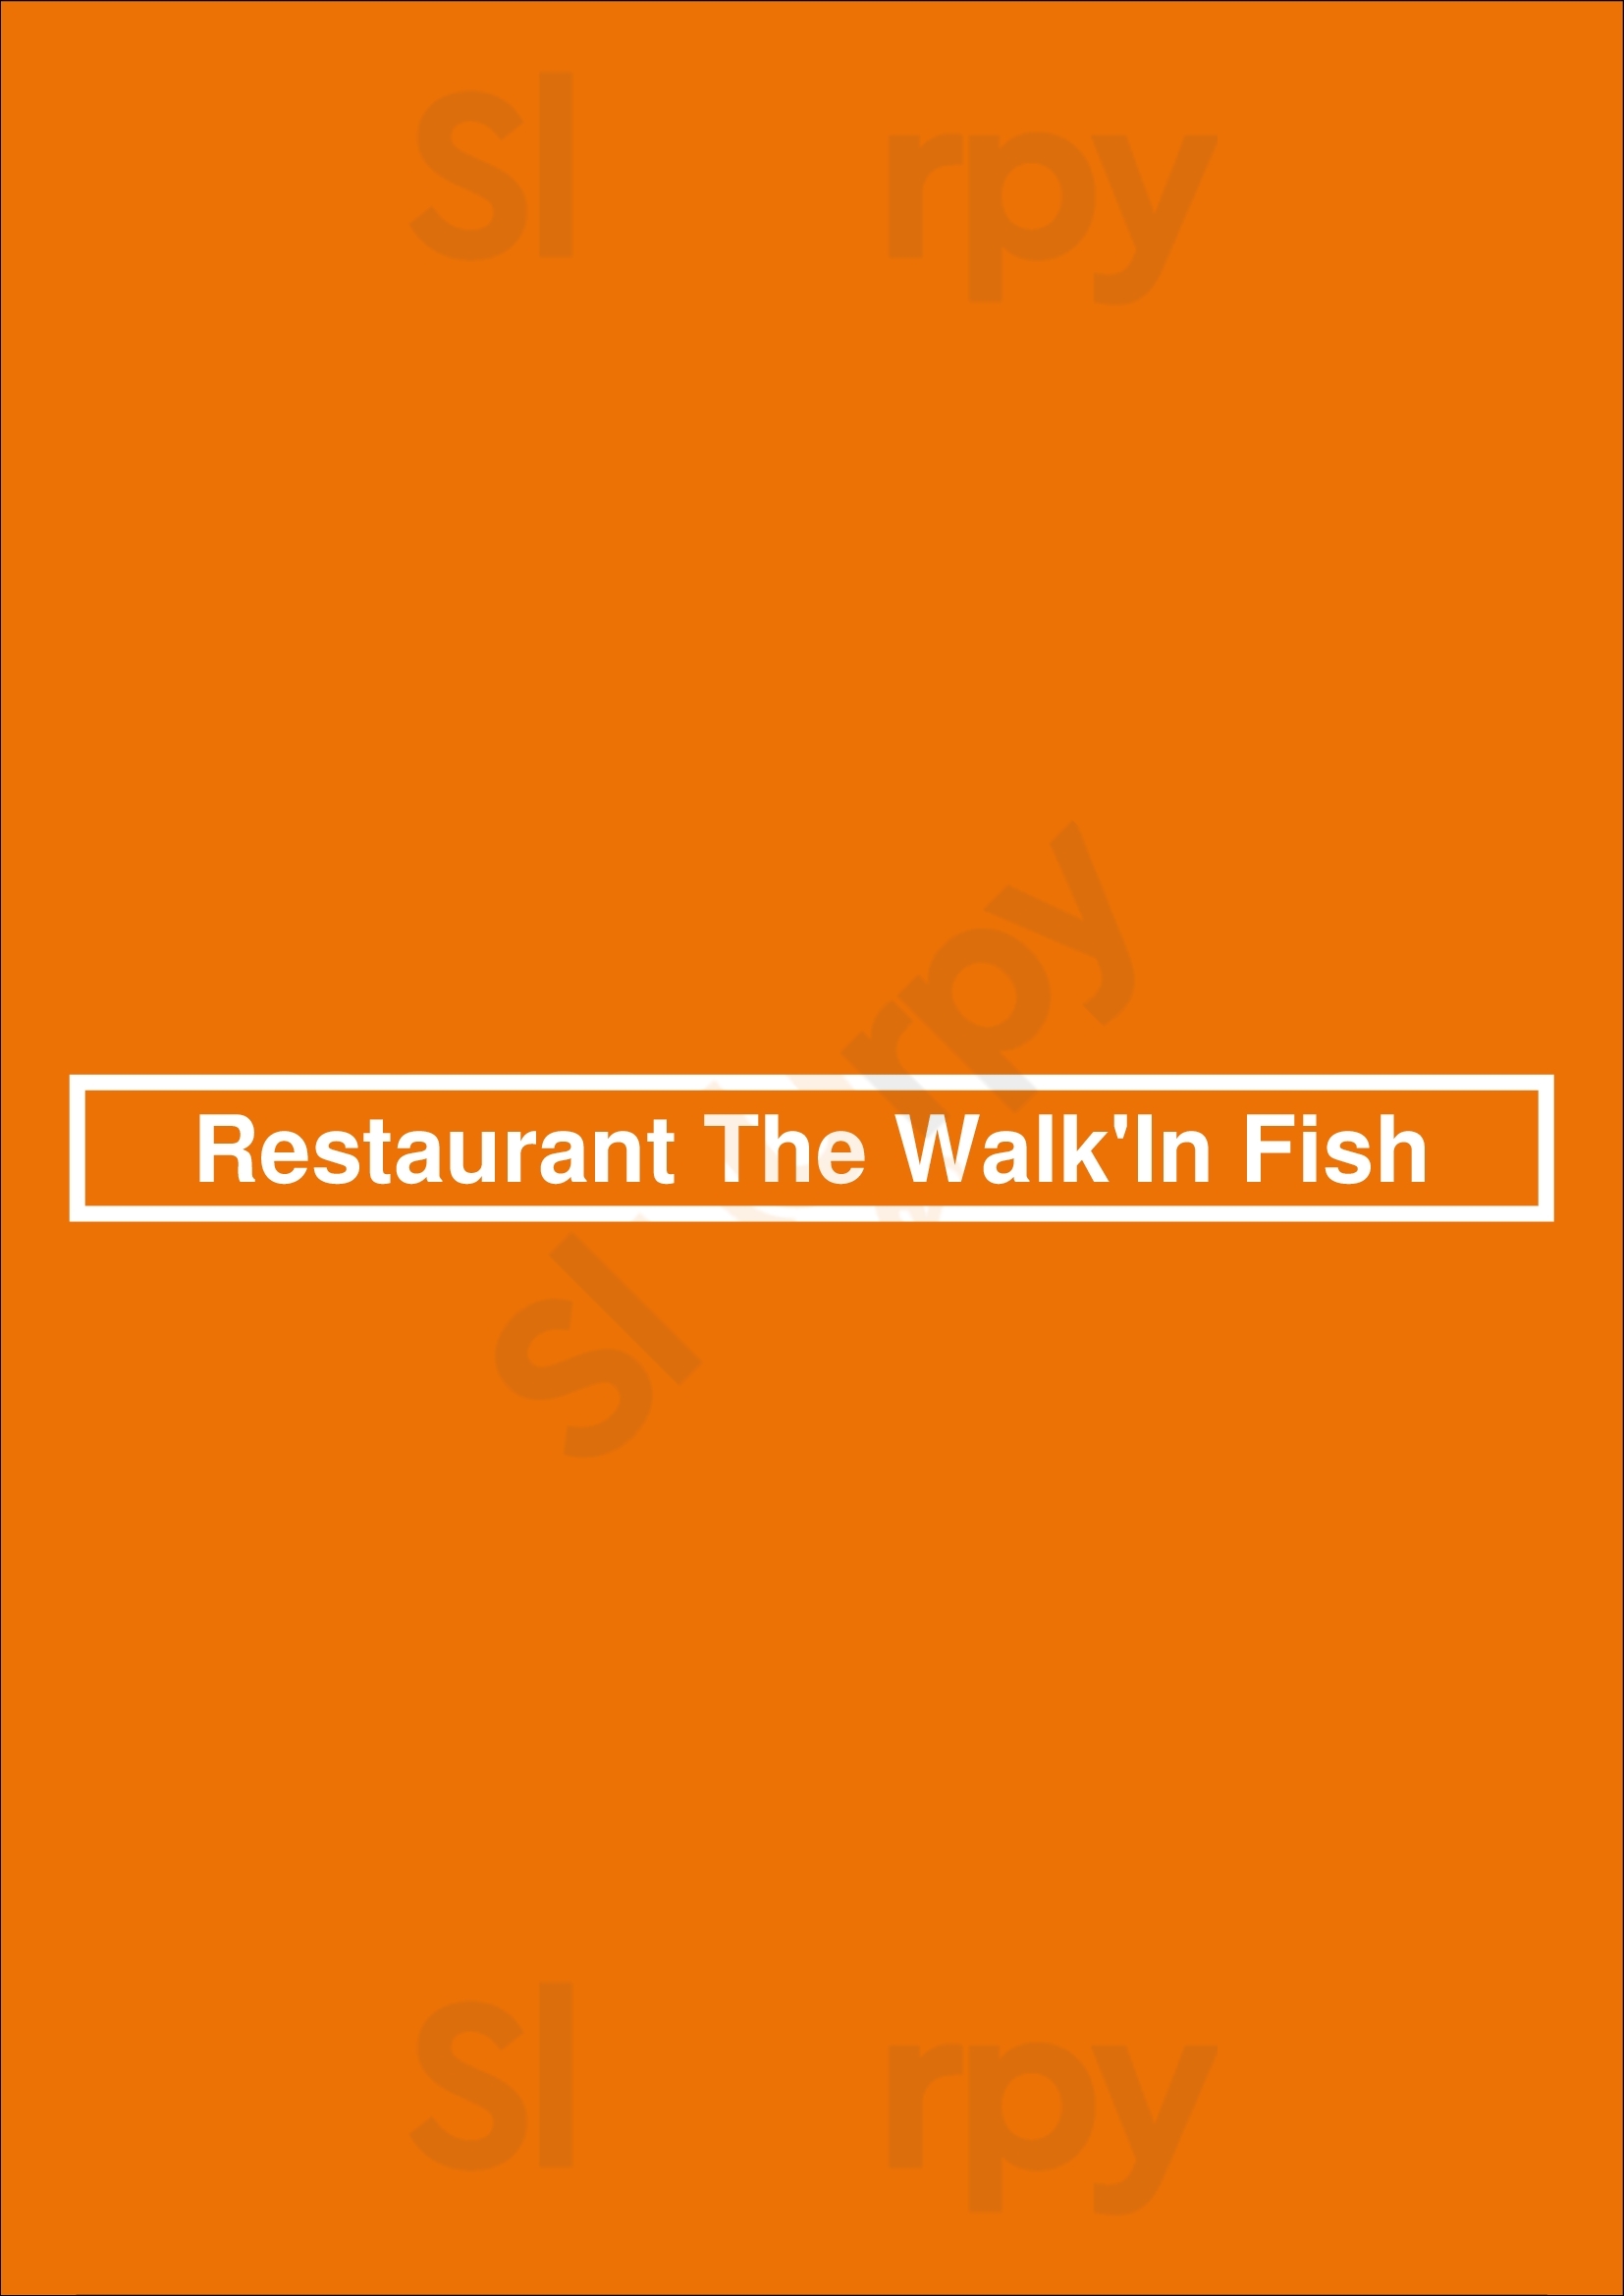 Restaurant The Walk'in Fish Rotterdam Menu - 1